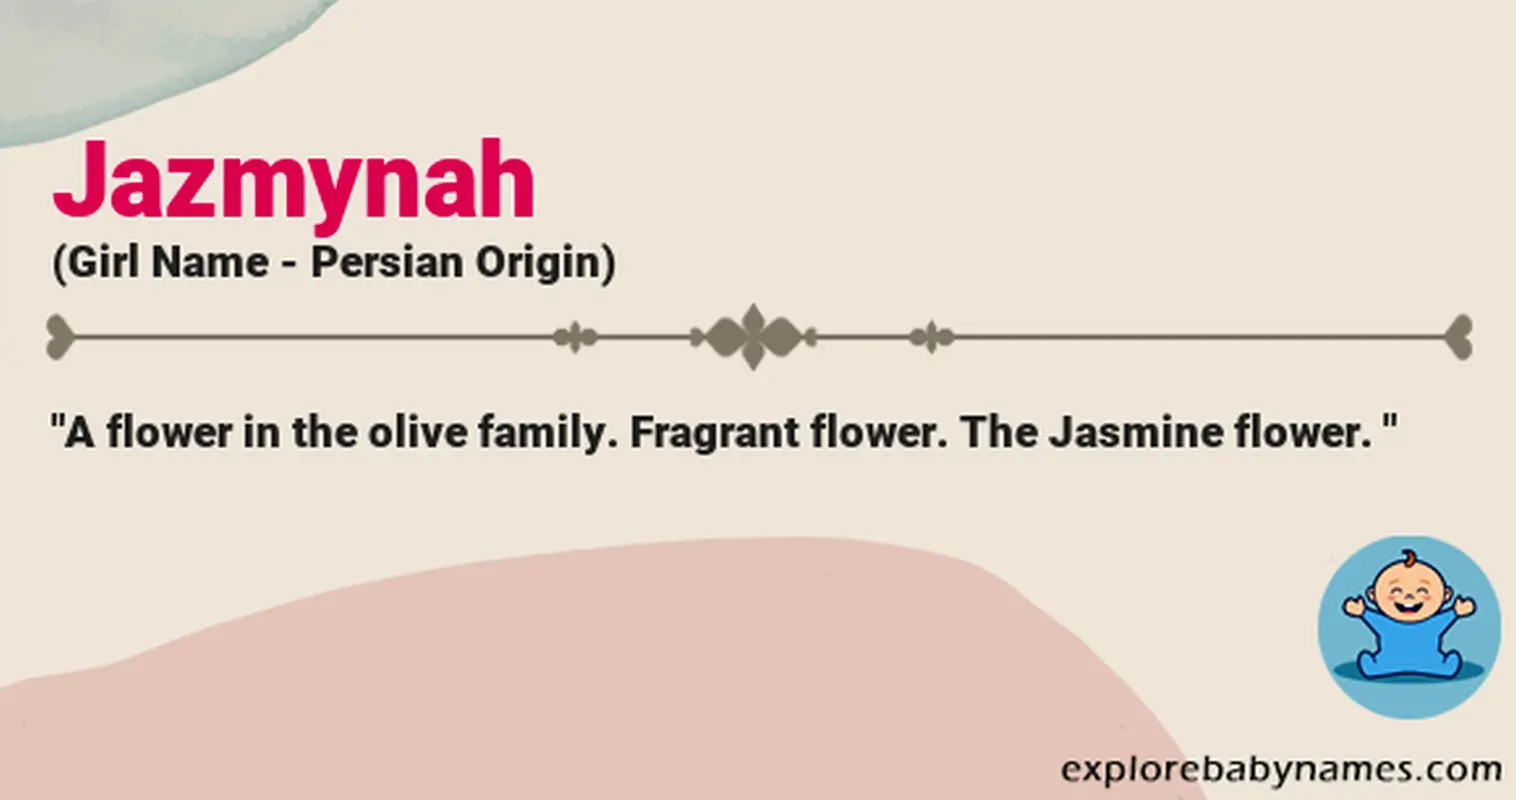 Meaning of Jazmynah